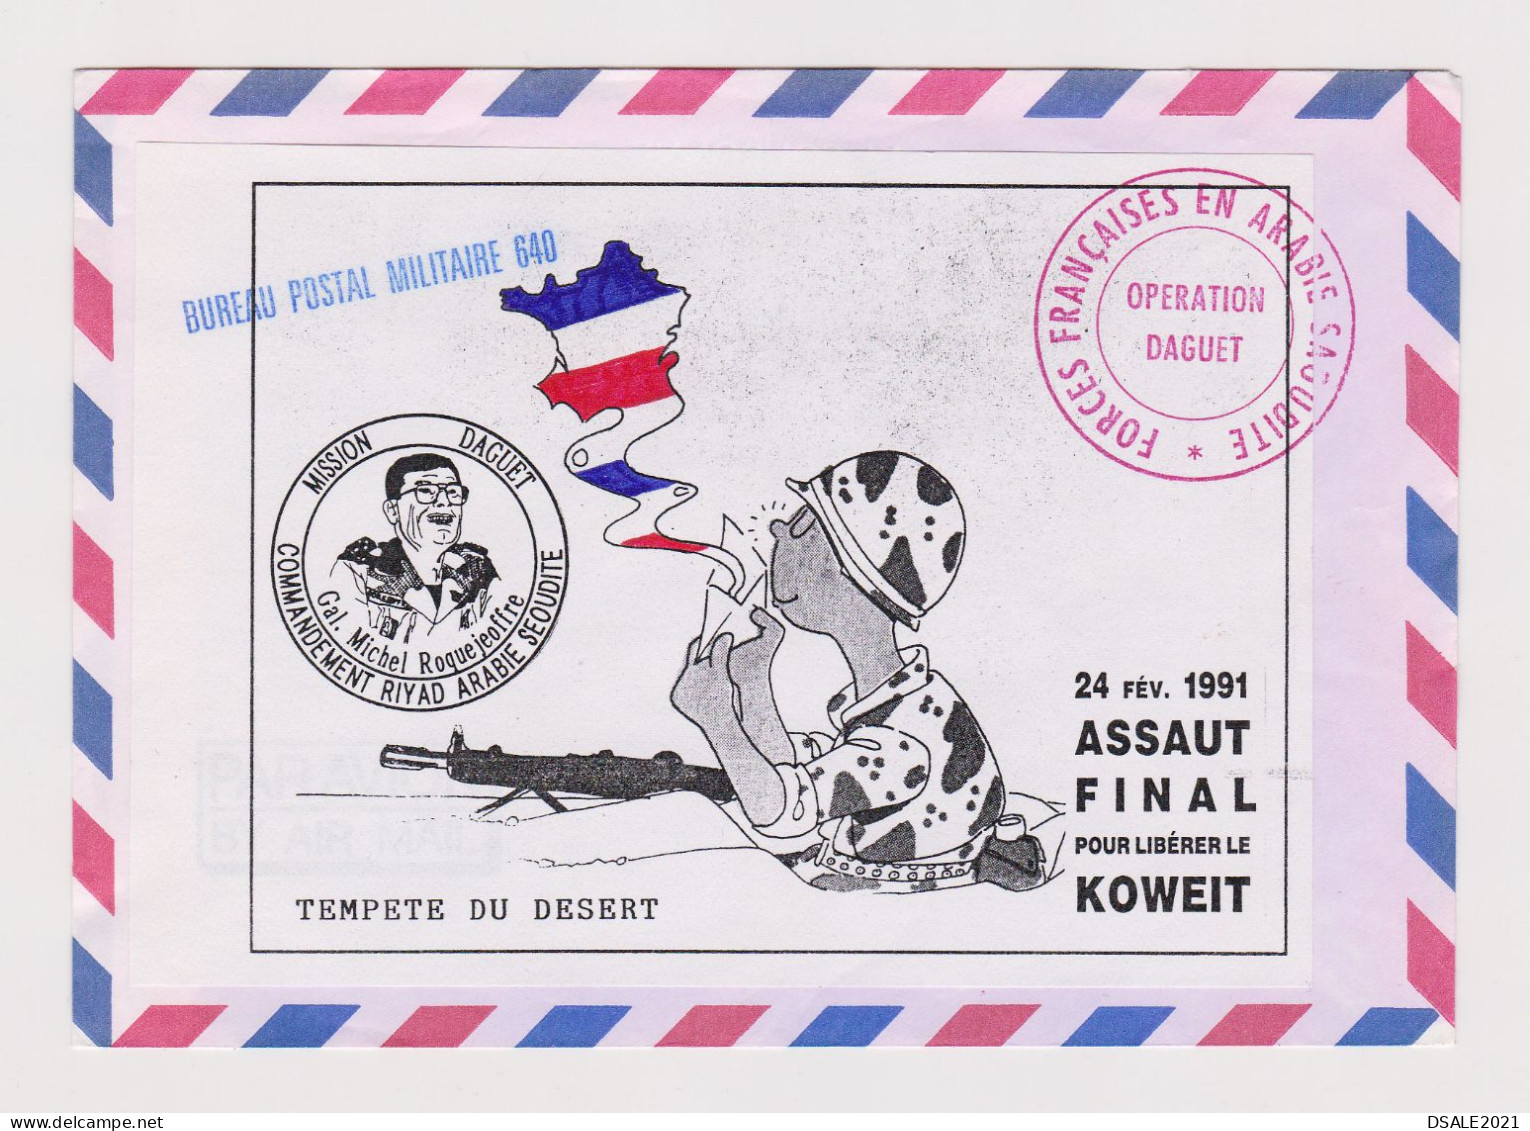 France 1991 French Military Post Cover, Gulf War, Operation Daguet Saudi Arabia, Desert War KUWAIT Liberation (67758) - Covers & Documents